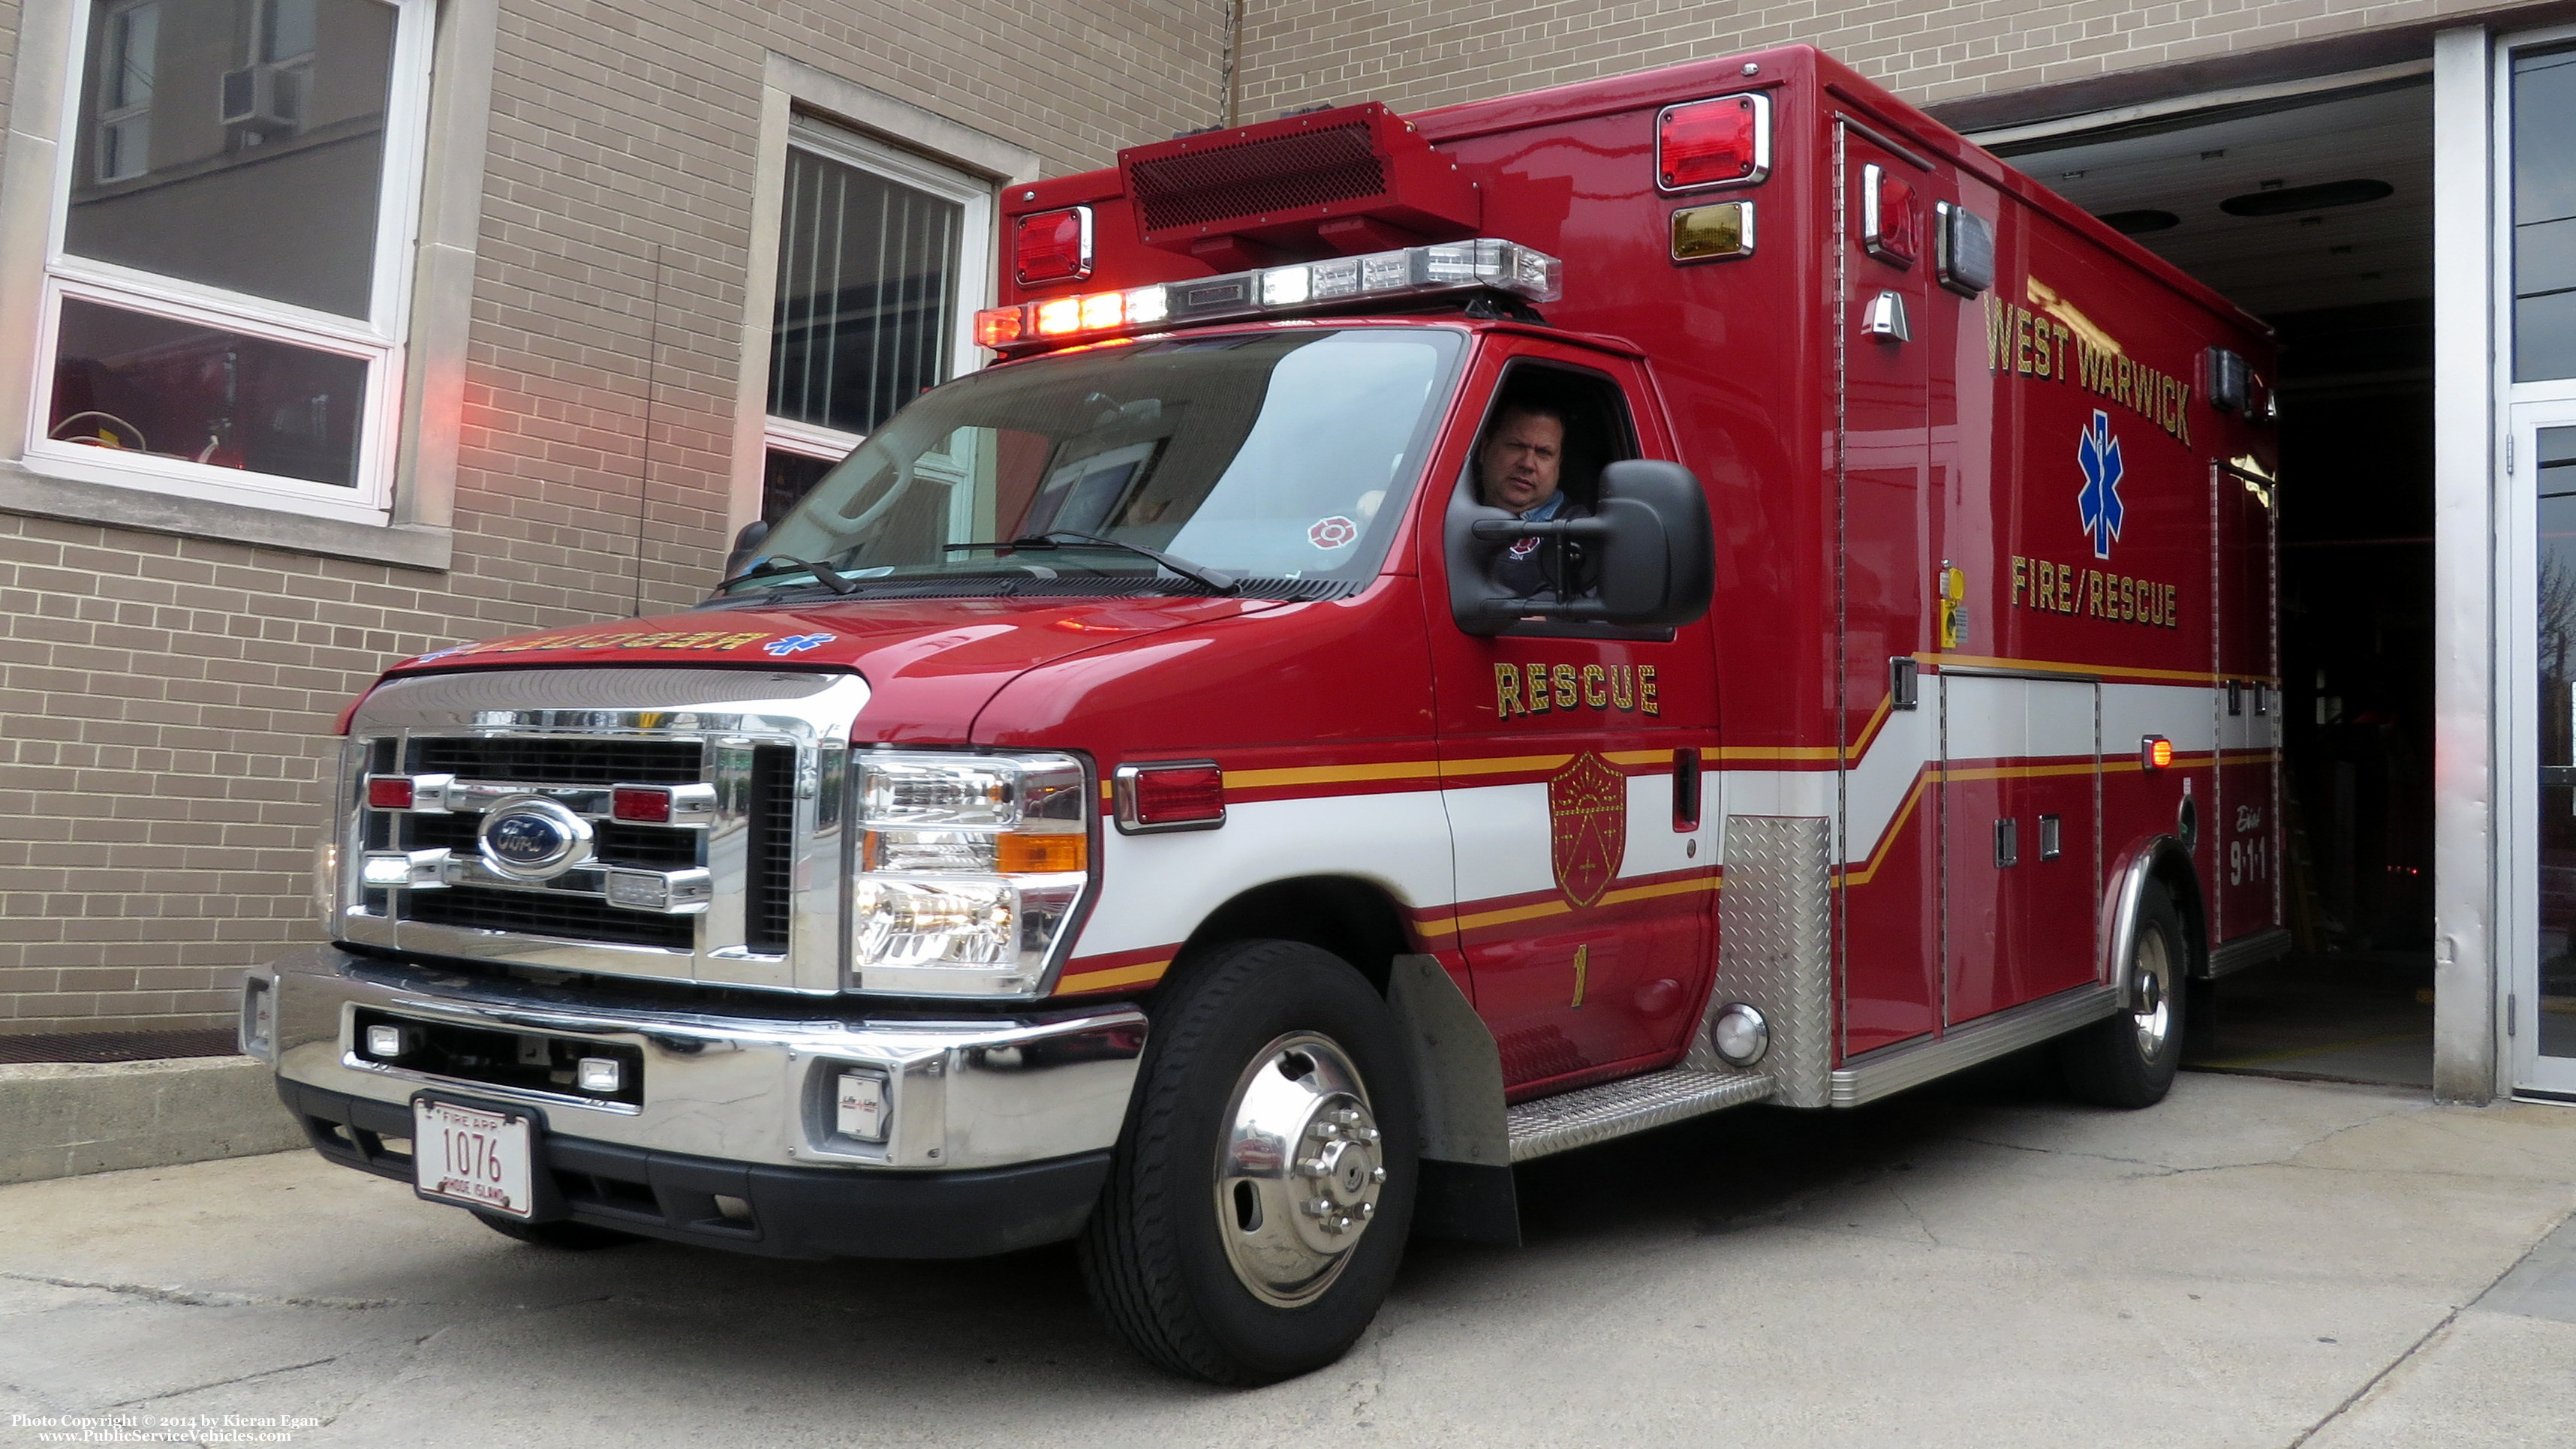 A photo  of West Warwick Fire
            Rescue 1, a 2012 Ford E-450             taken by Kieran Egan